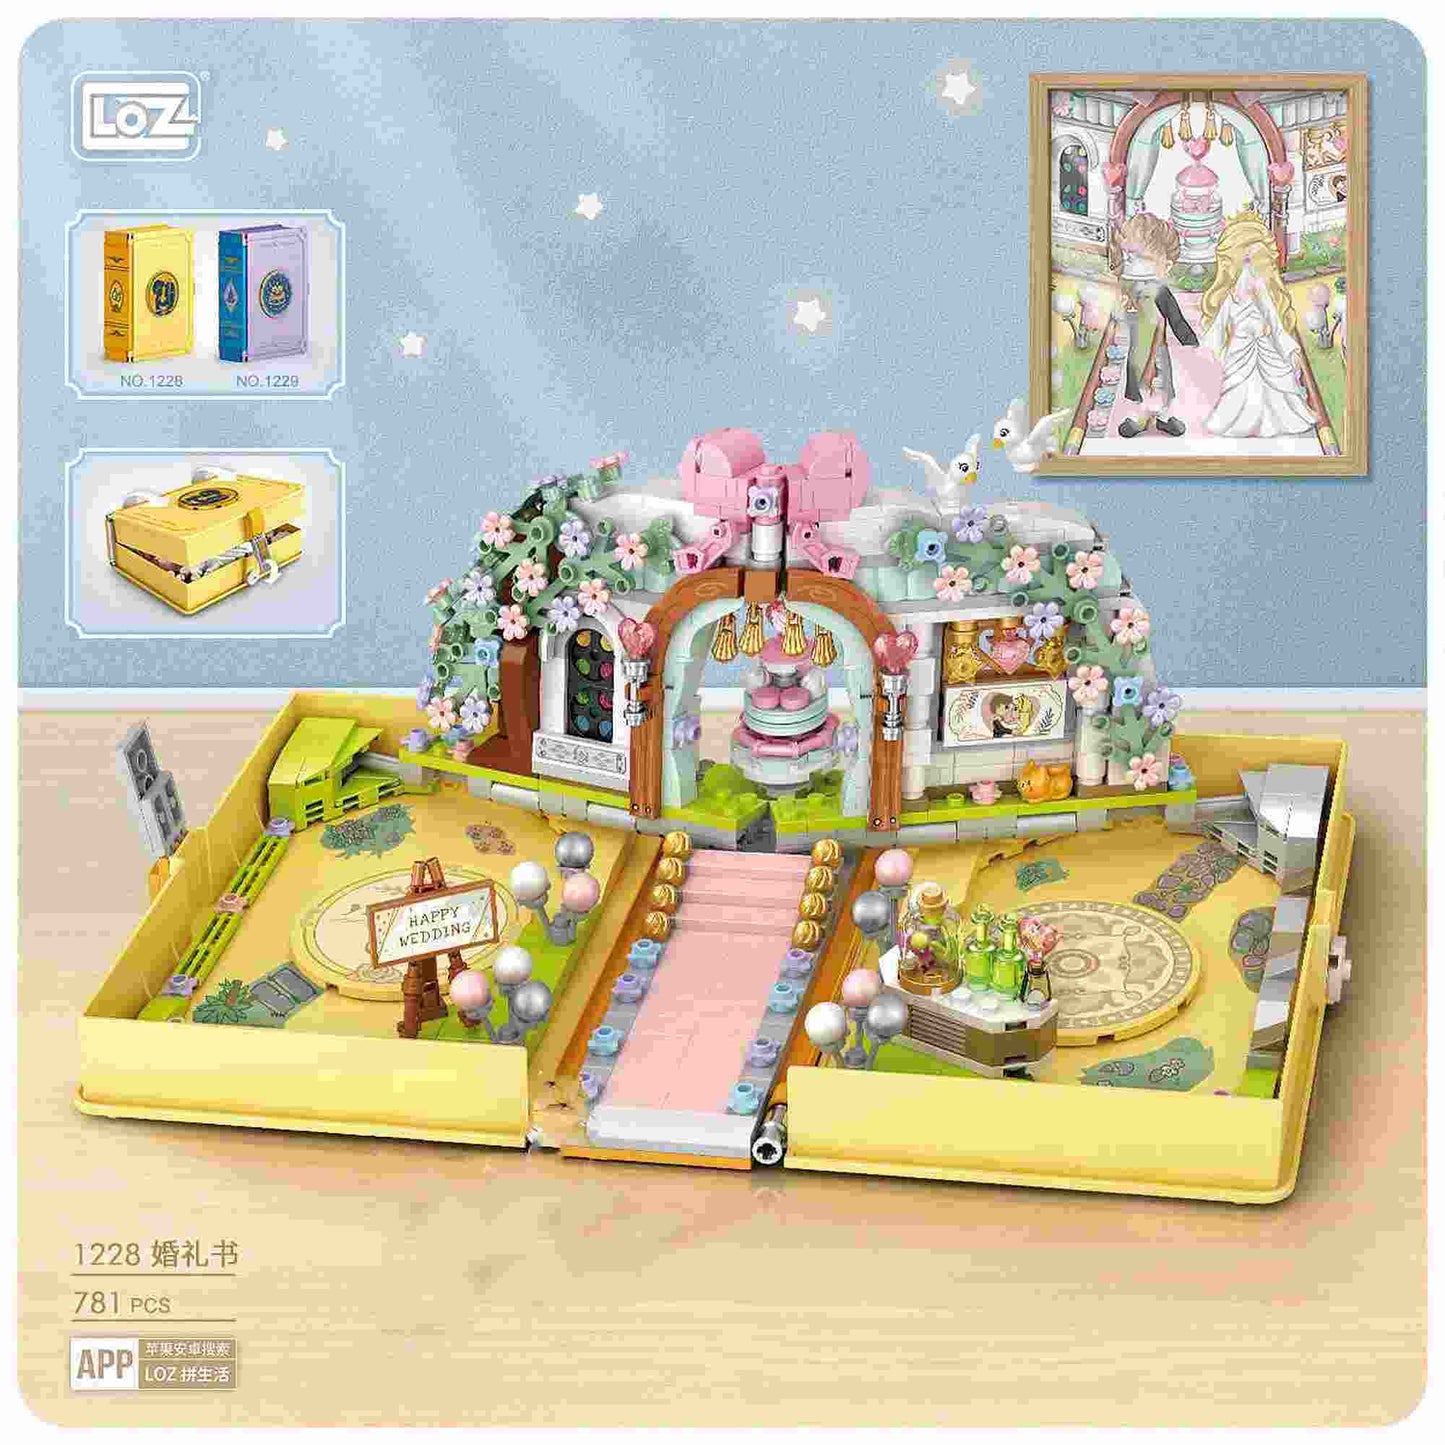 LOZ 1228 Mini Particle Wedding Book Assembled Assembled Modular Building Blocks Bricks Children's Educational Toys Birthday Gift